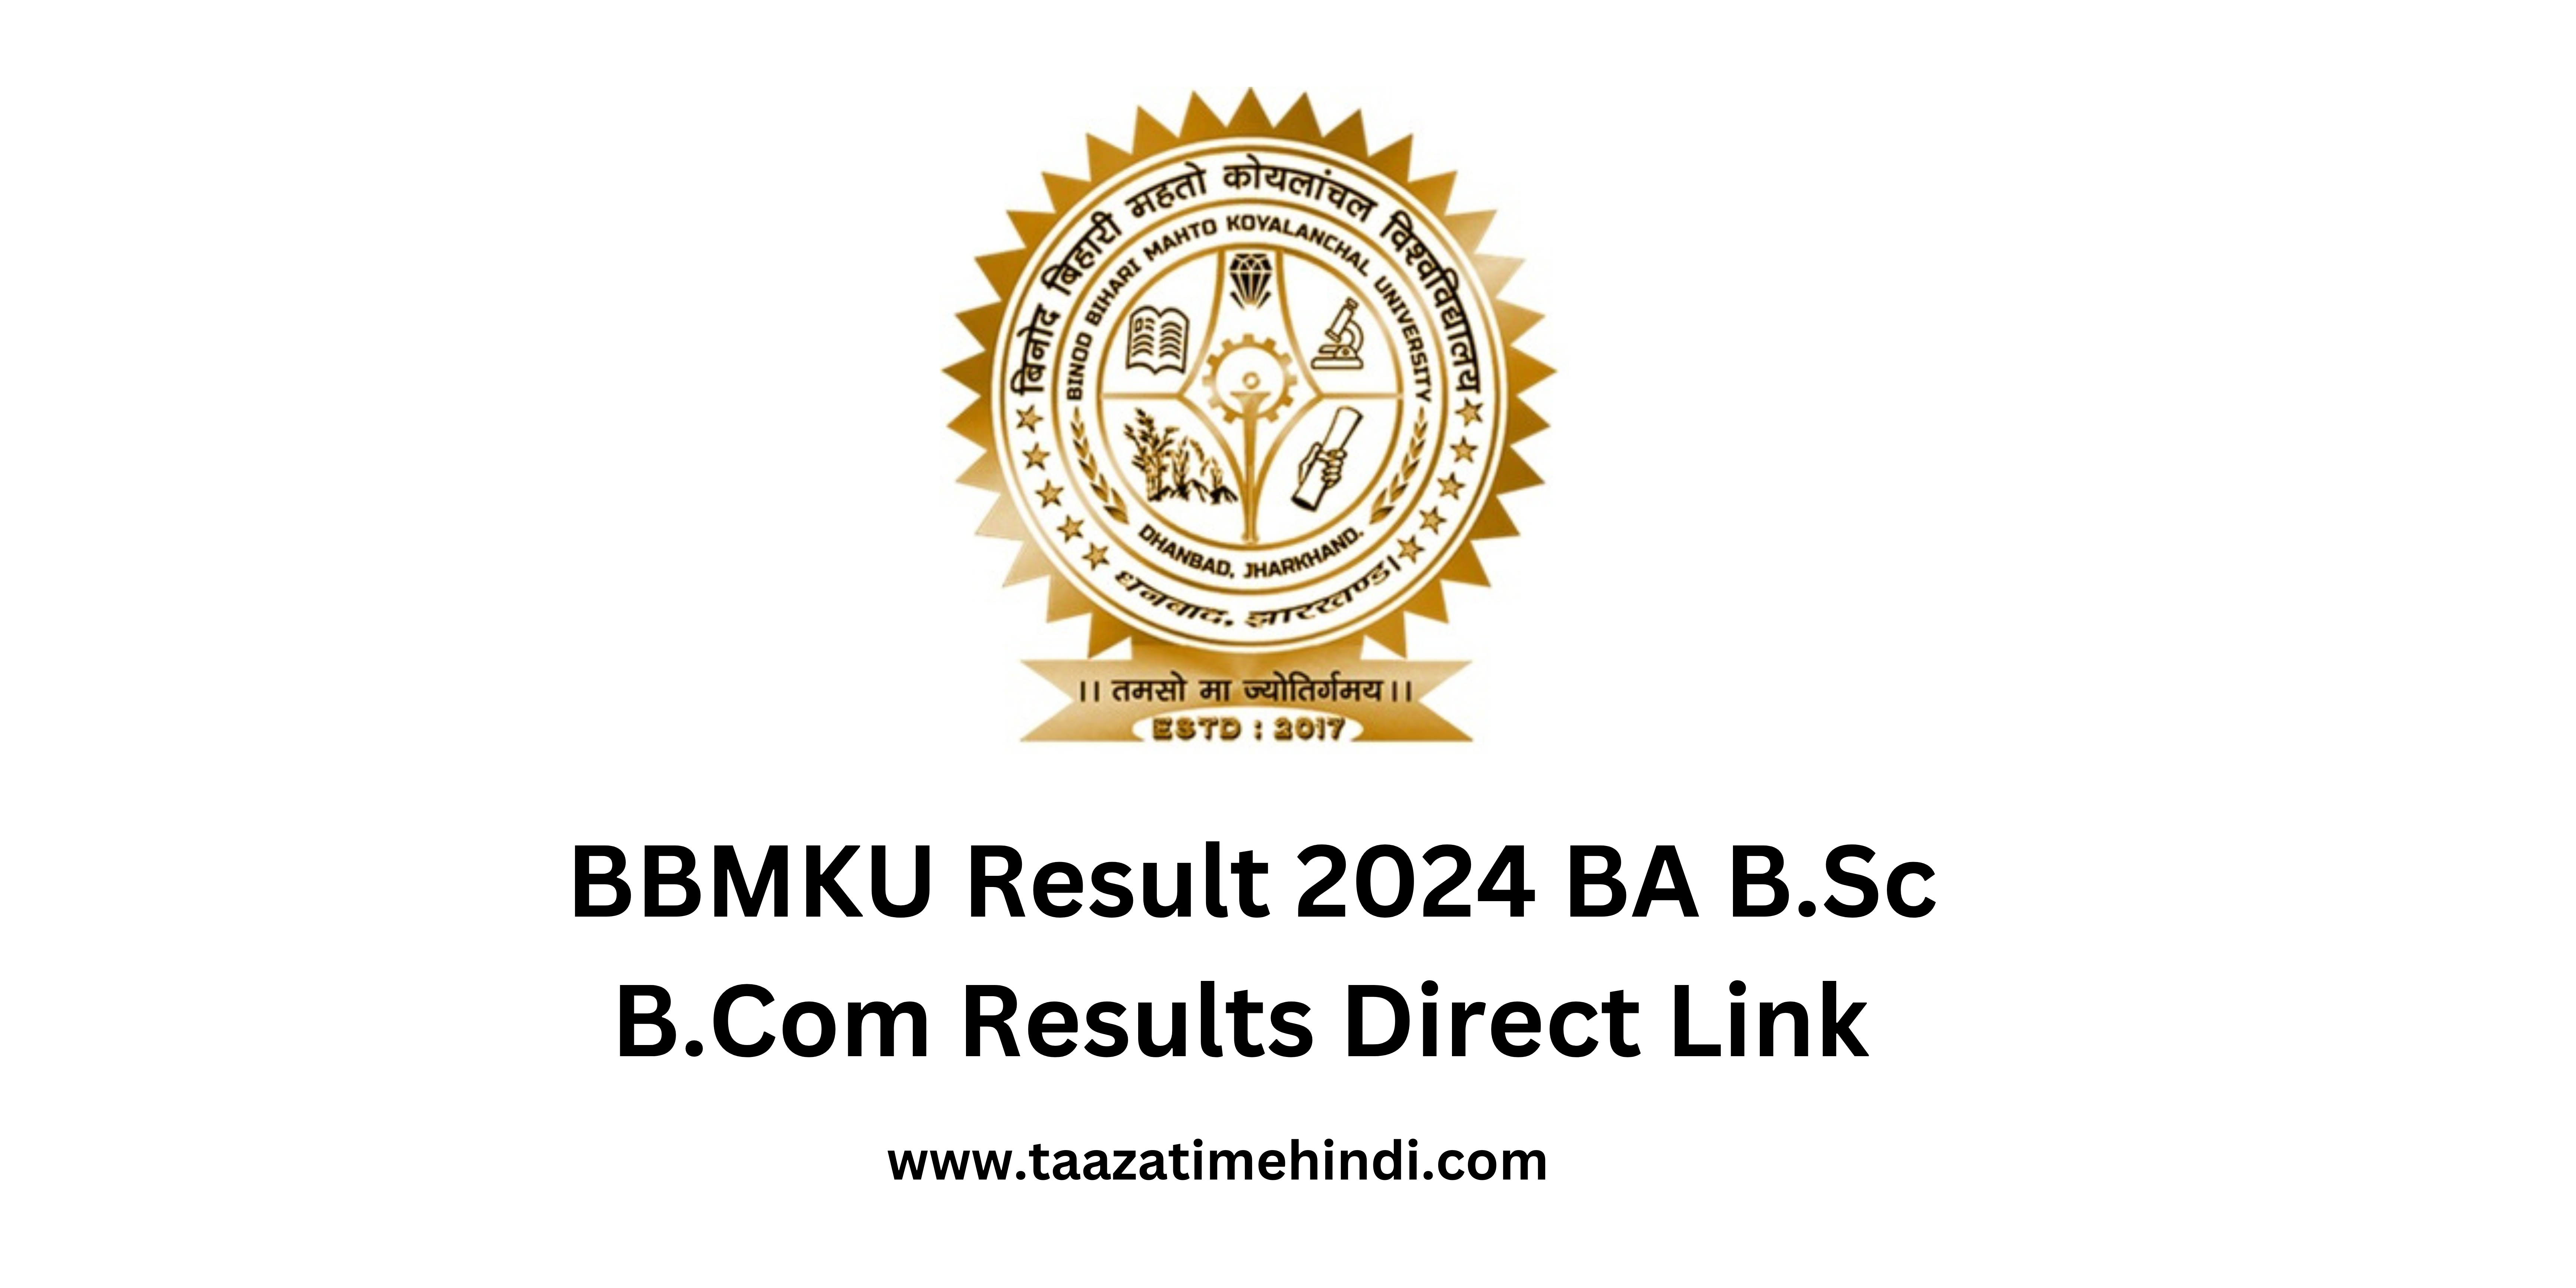 BBMKU Result 2024 BA B.Sc B.Com Results Direct Link bbmkuniv.in taazatimehindi